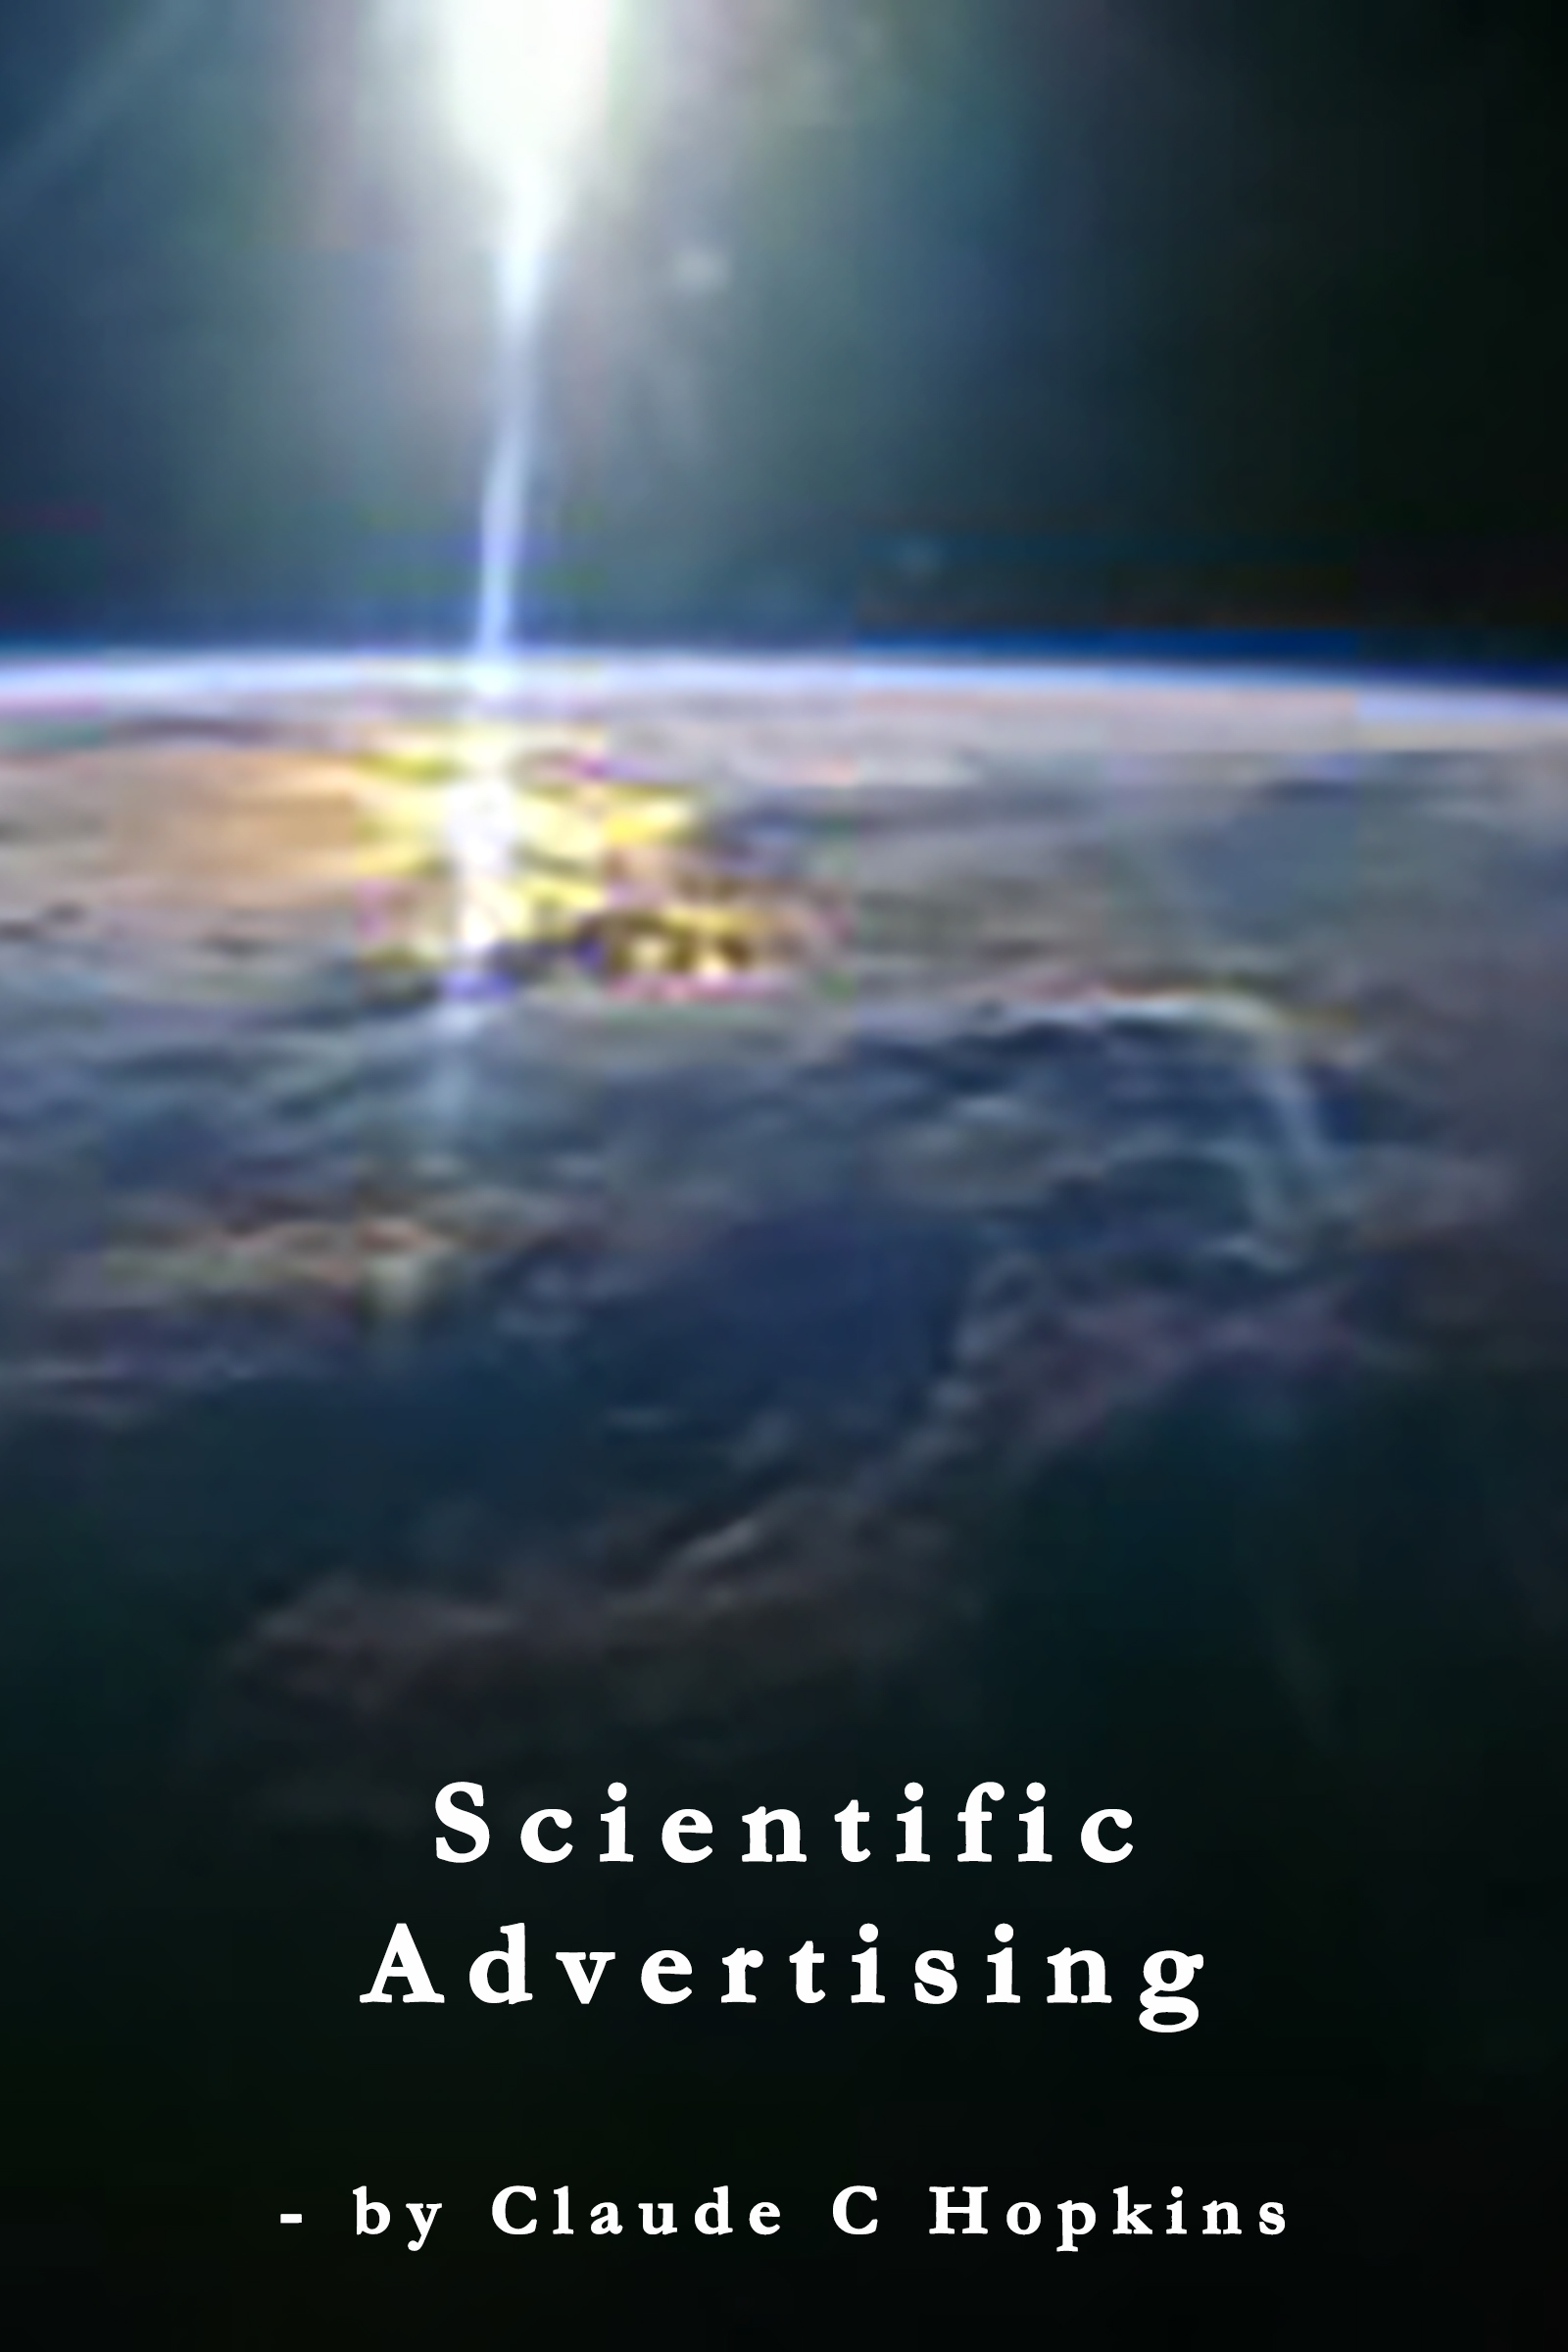 Scientific Advertising - by Claude C Hopkins